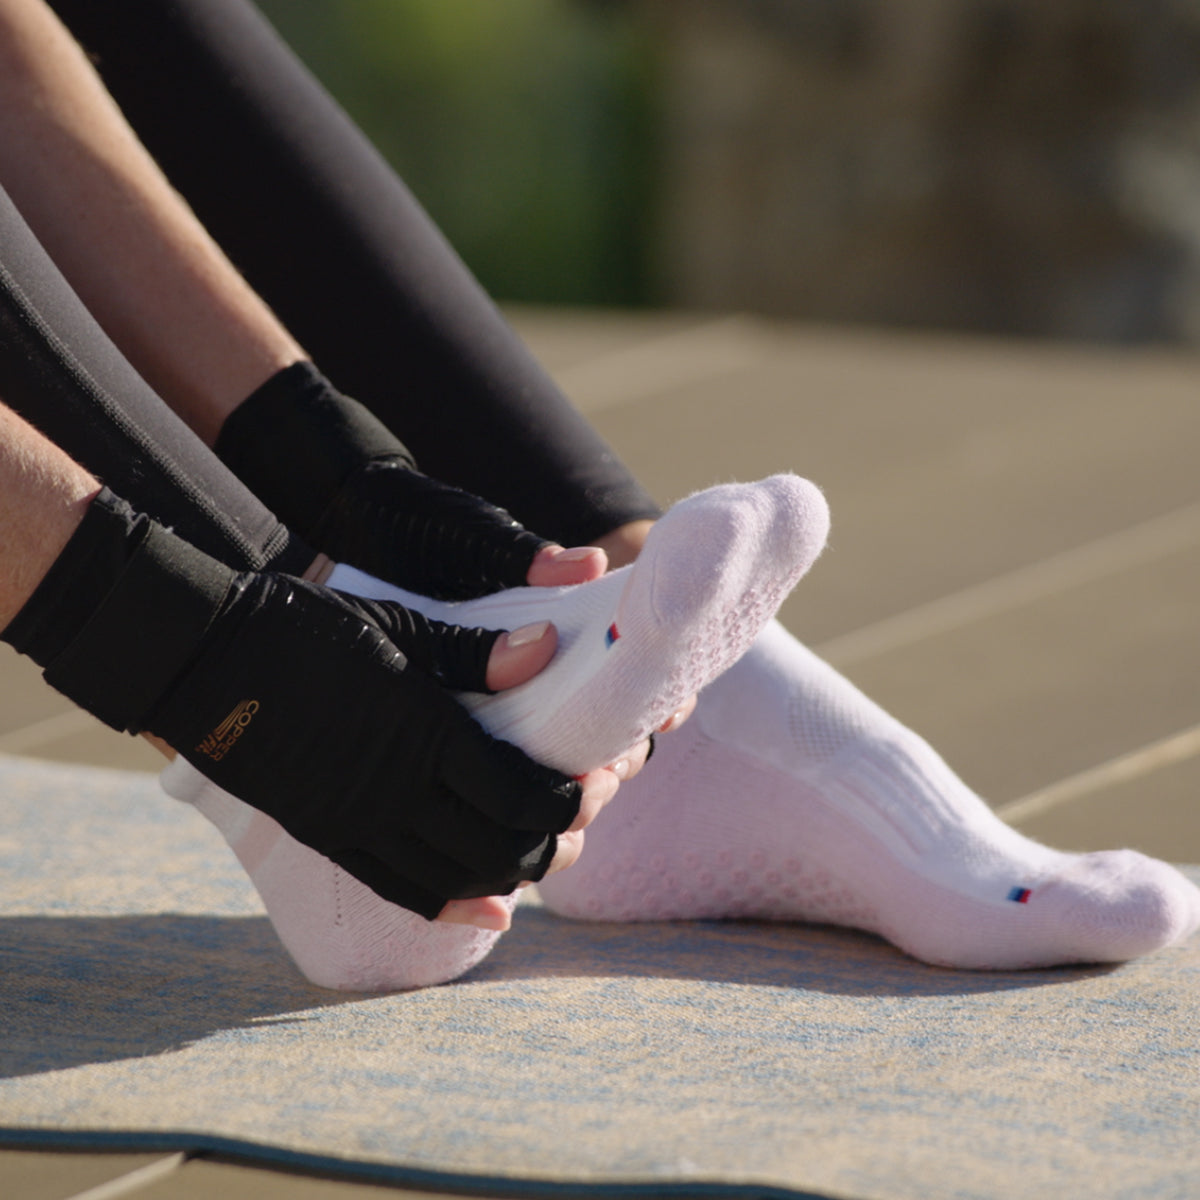 Gripperz Non Slip Socks Medium Pink Pair - Superior Health Care